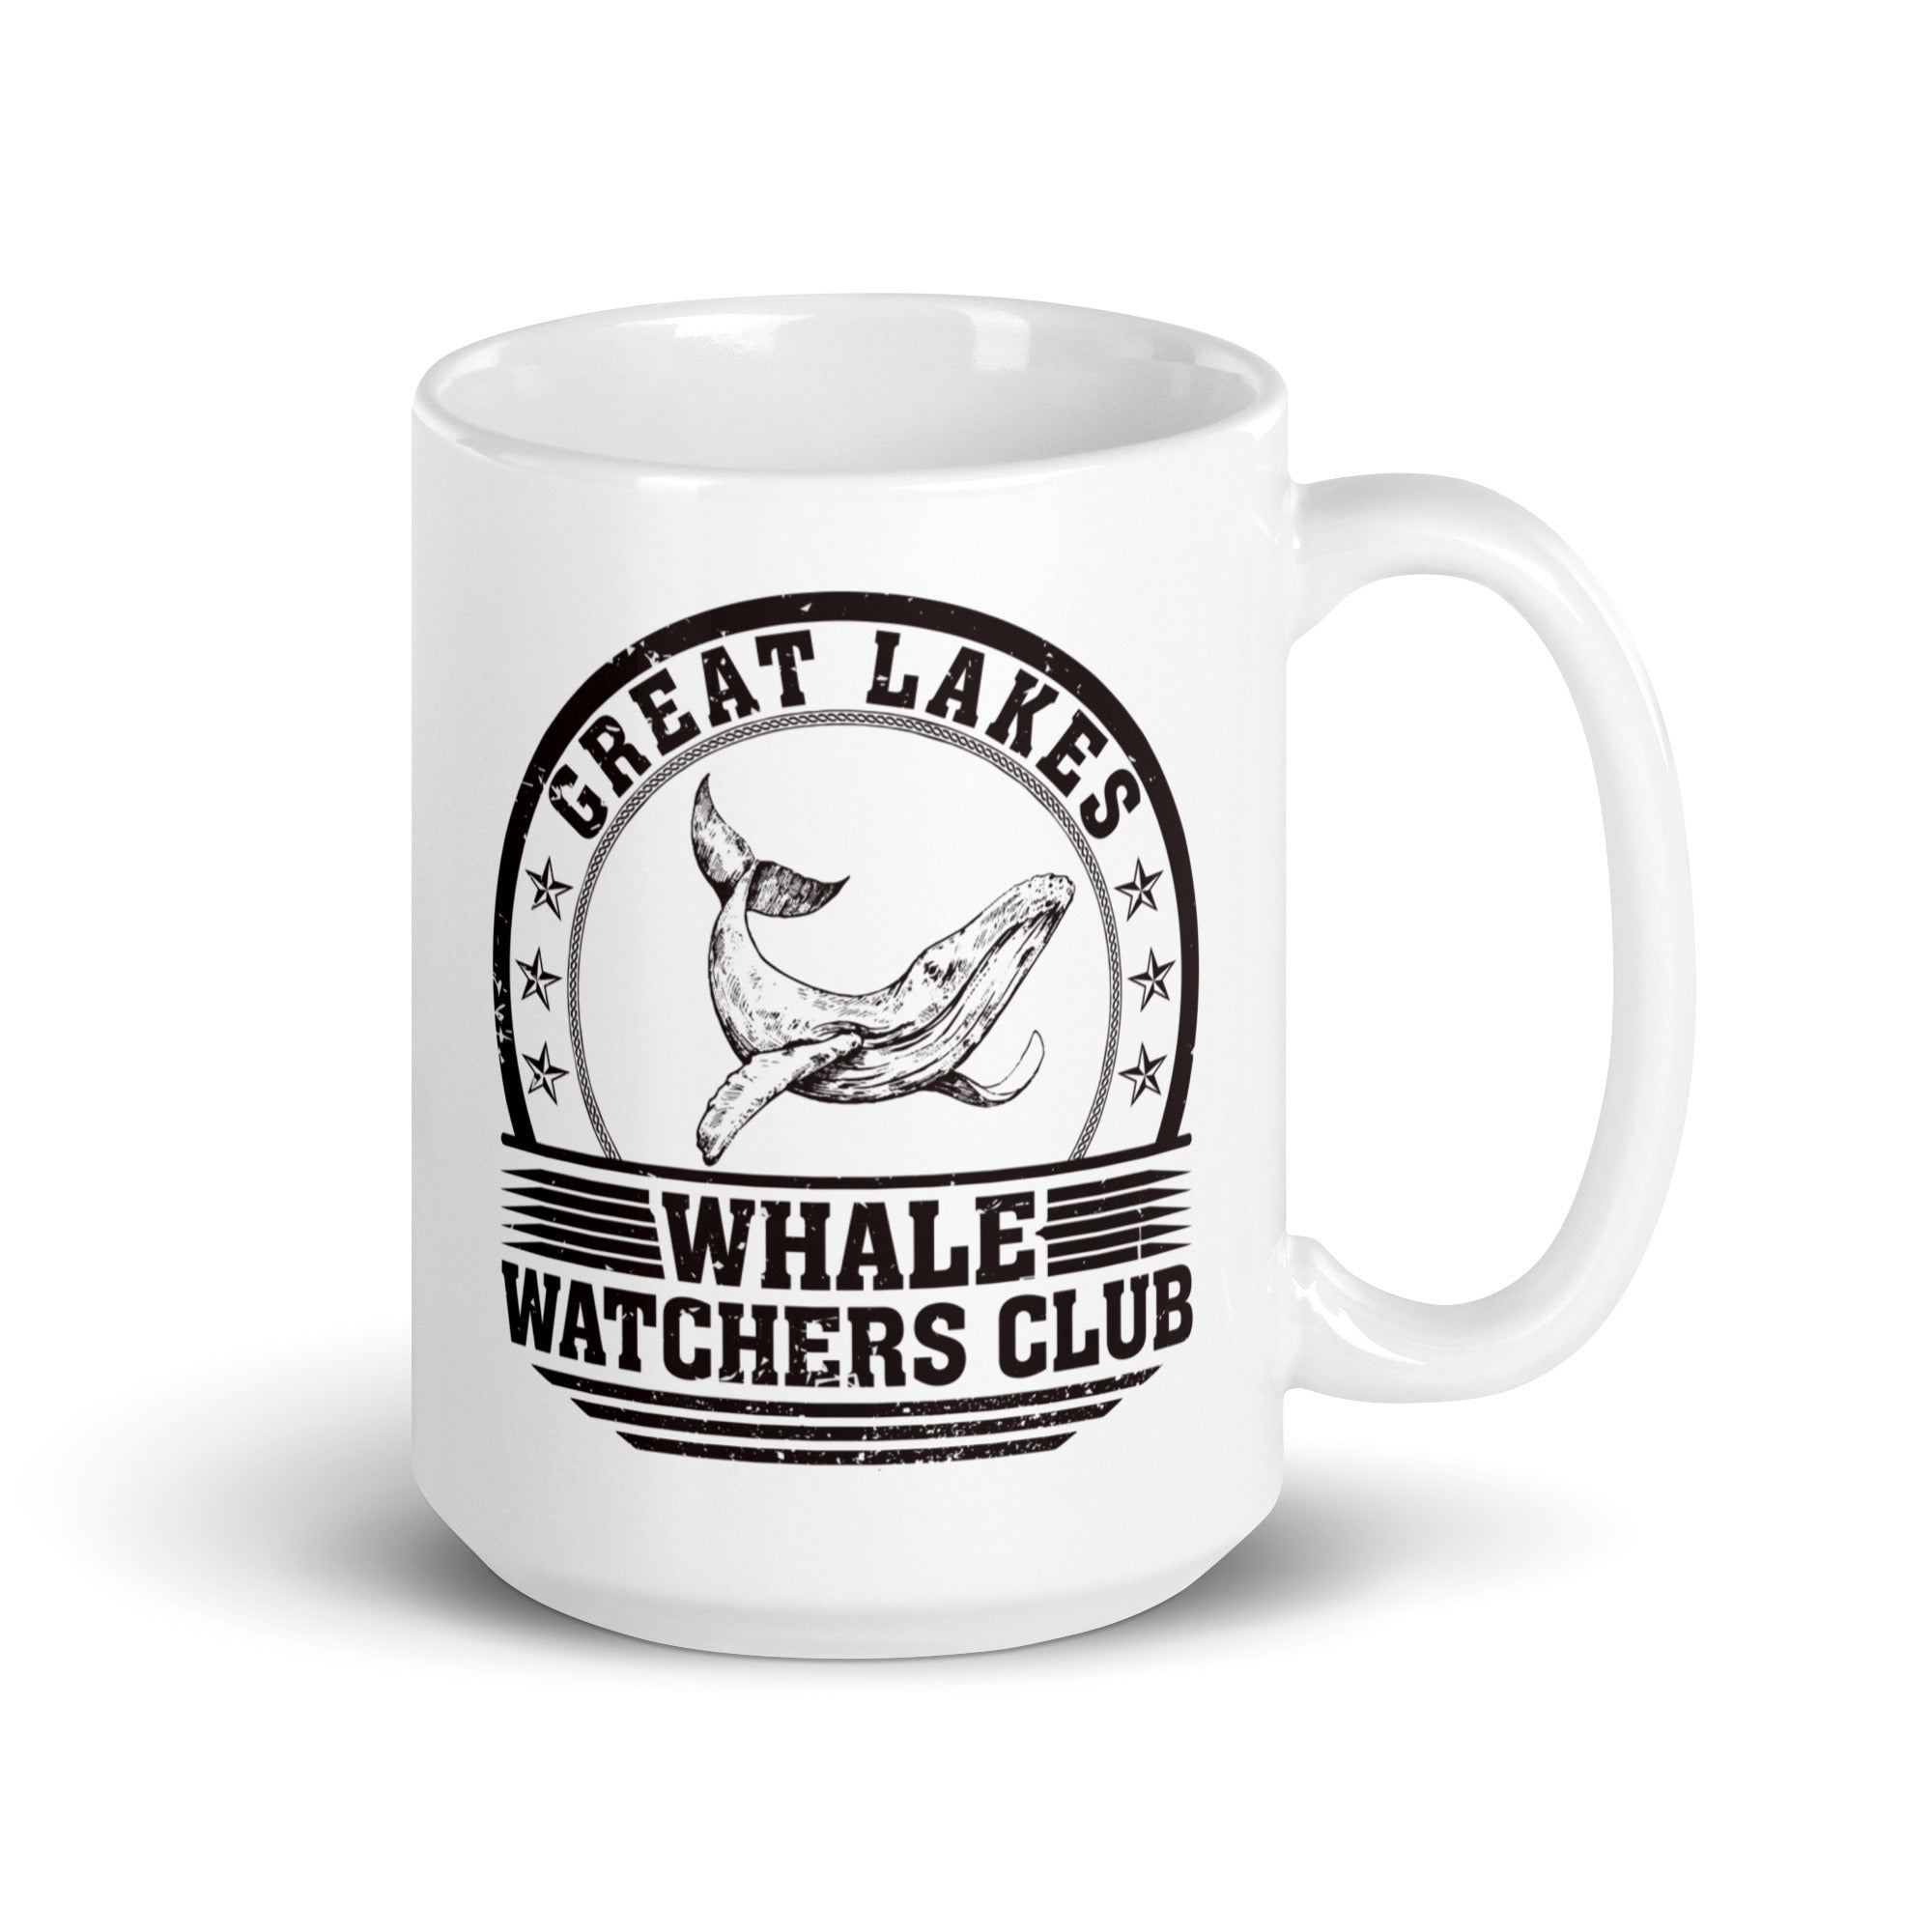 Great Lakes Whale Watchers Mug - 3 Sizes